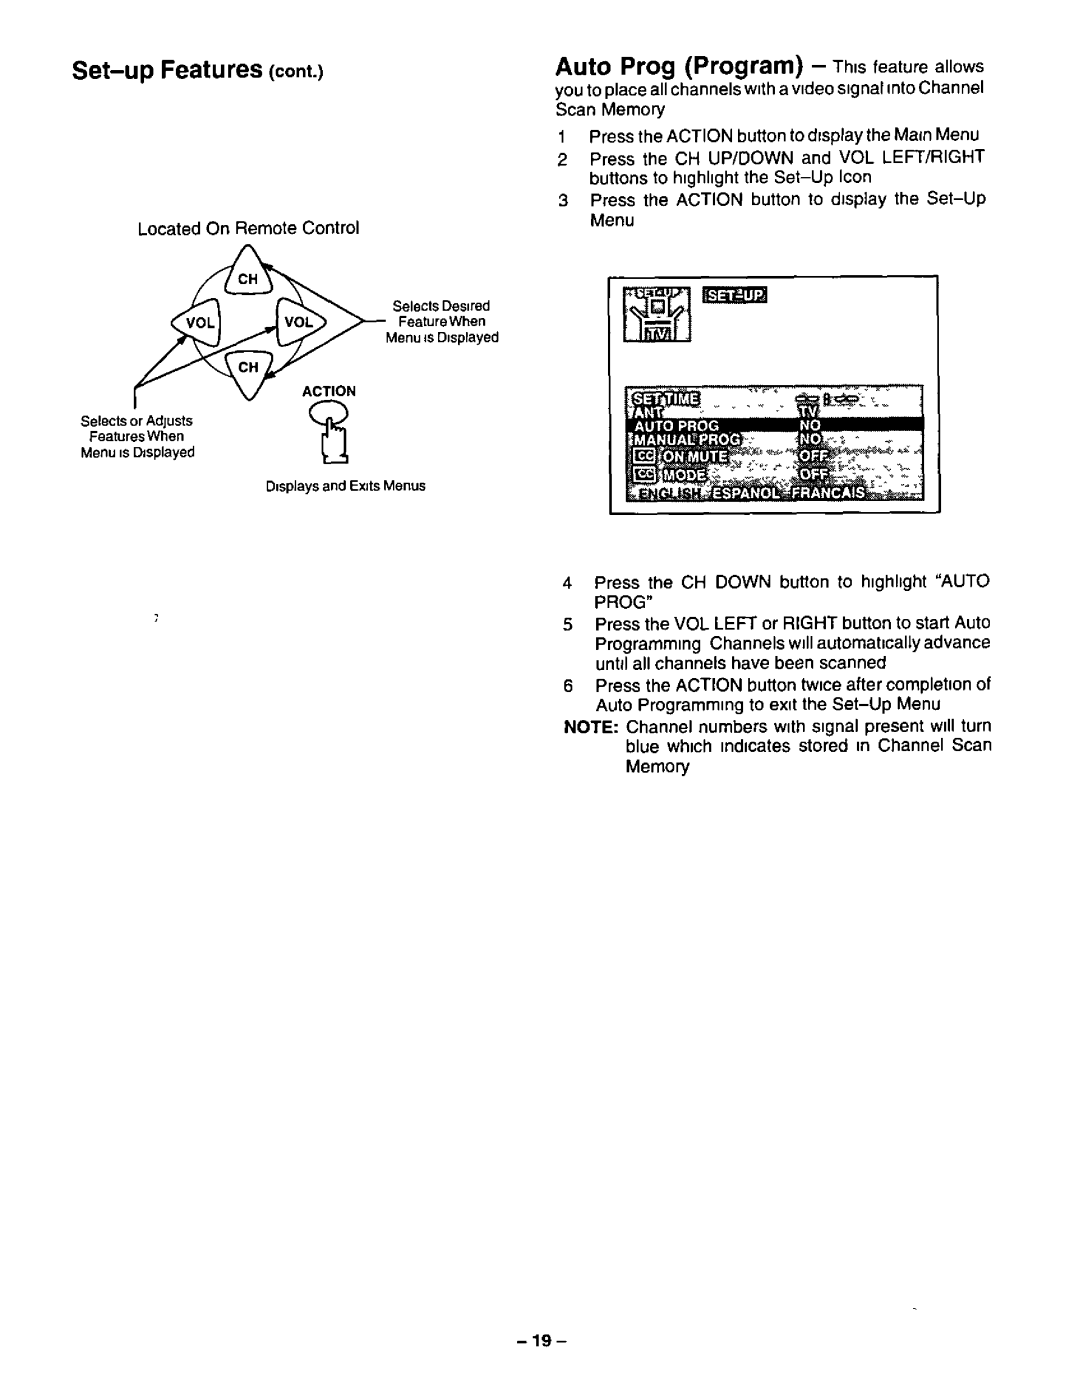 Panasonic CT-13R23 manual 